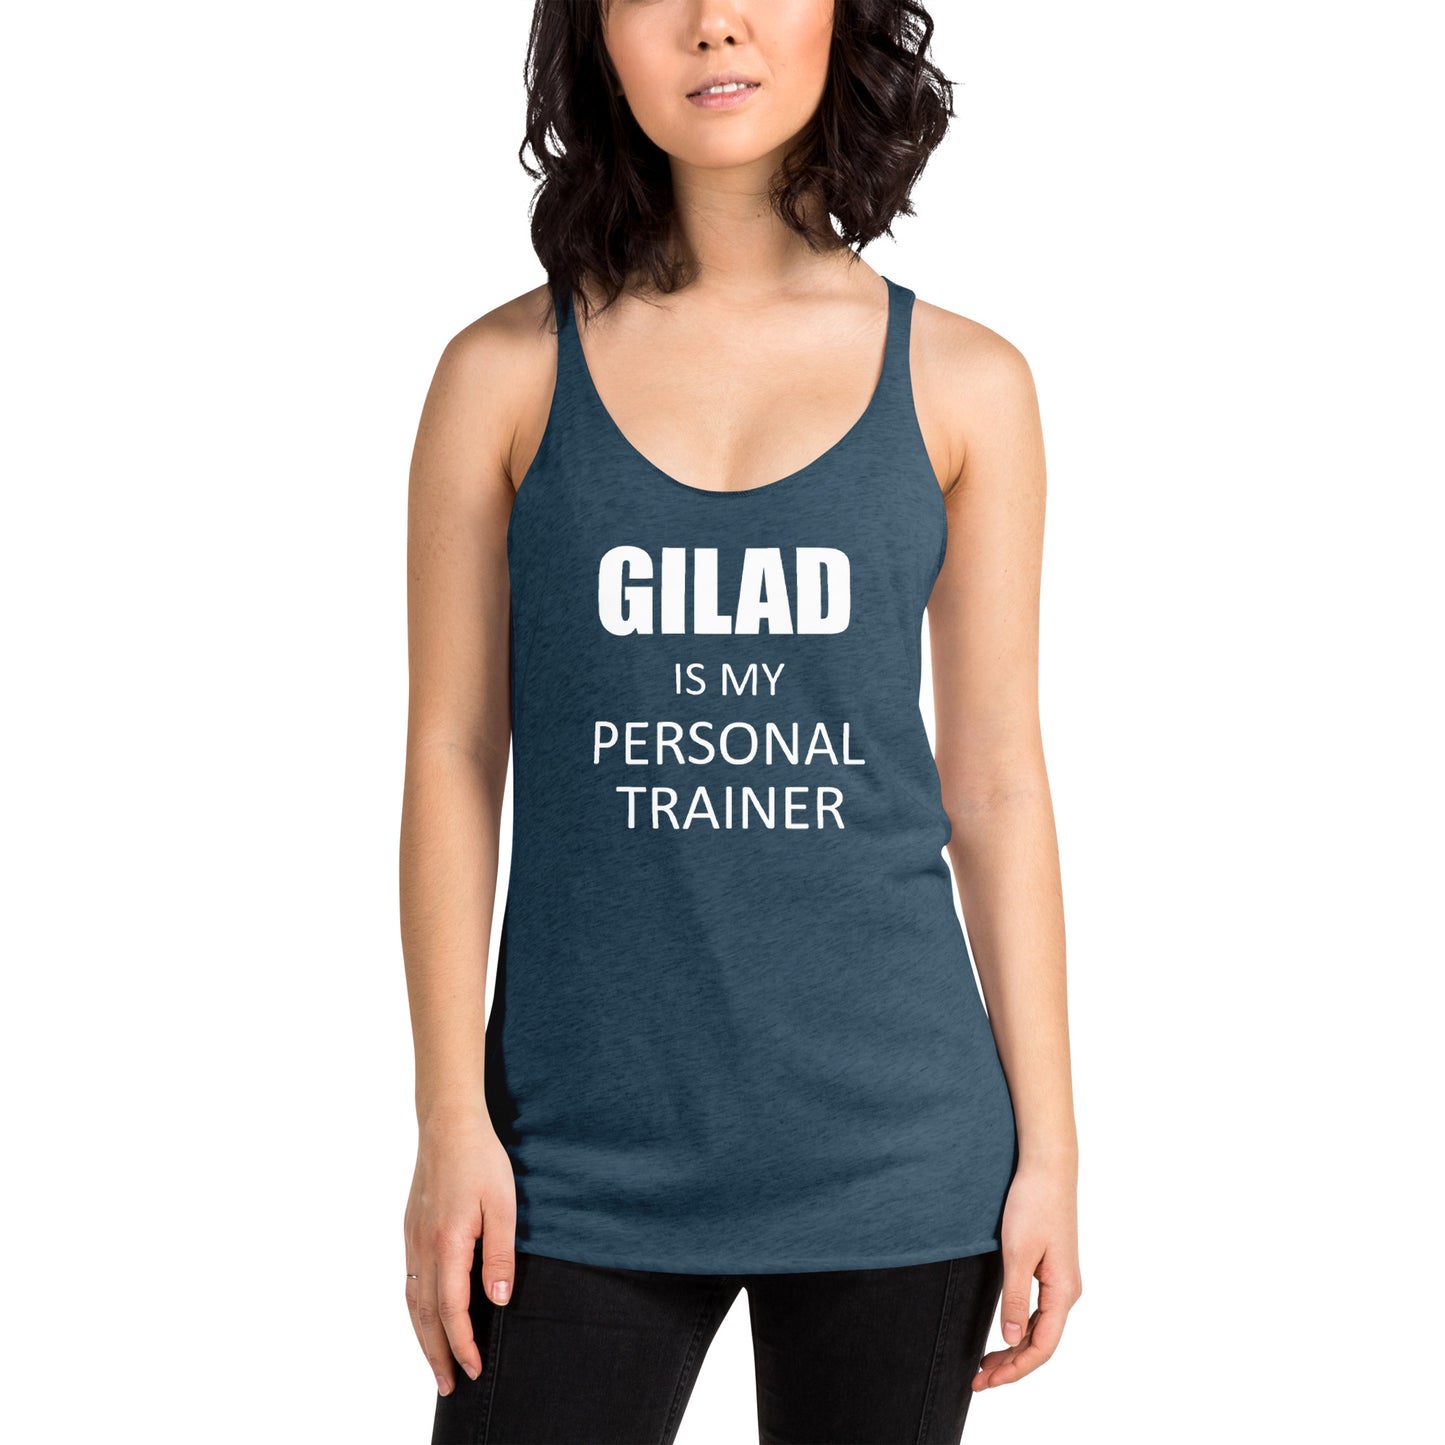 Gilad is My Personal Trainer Women's Racerback Tank